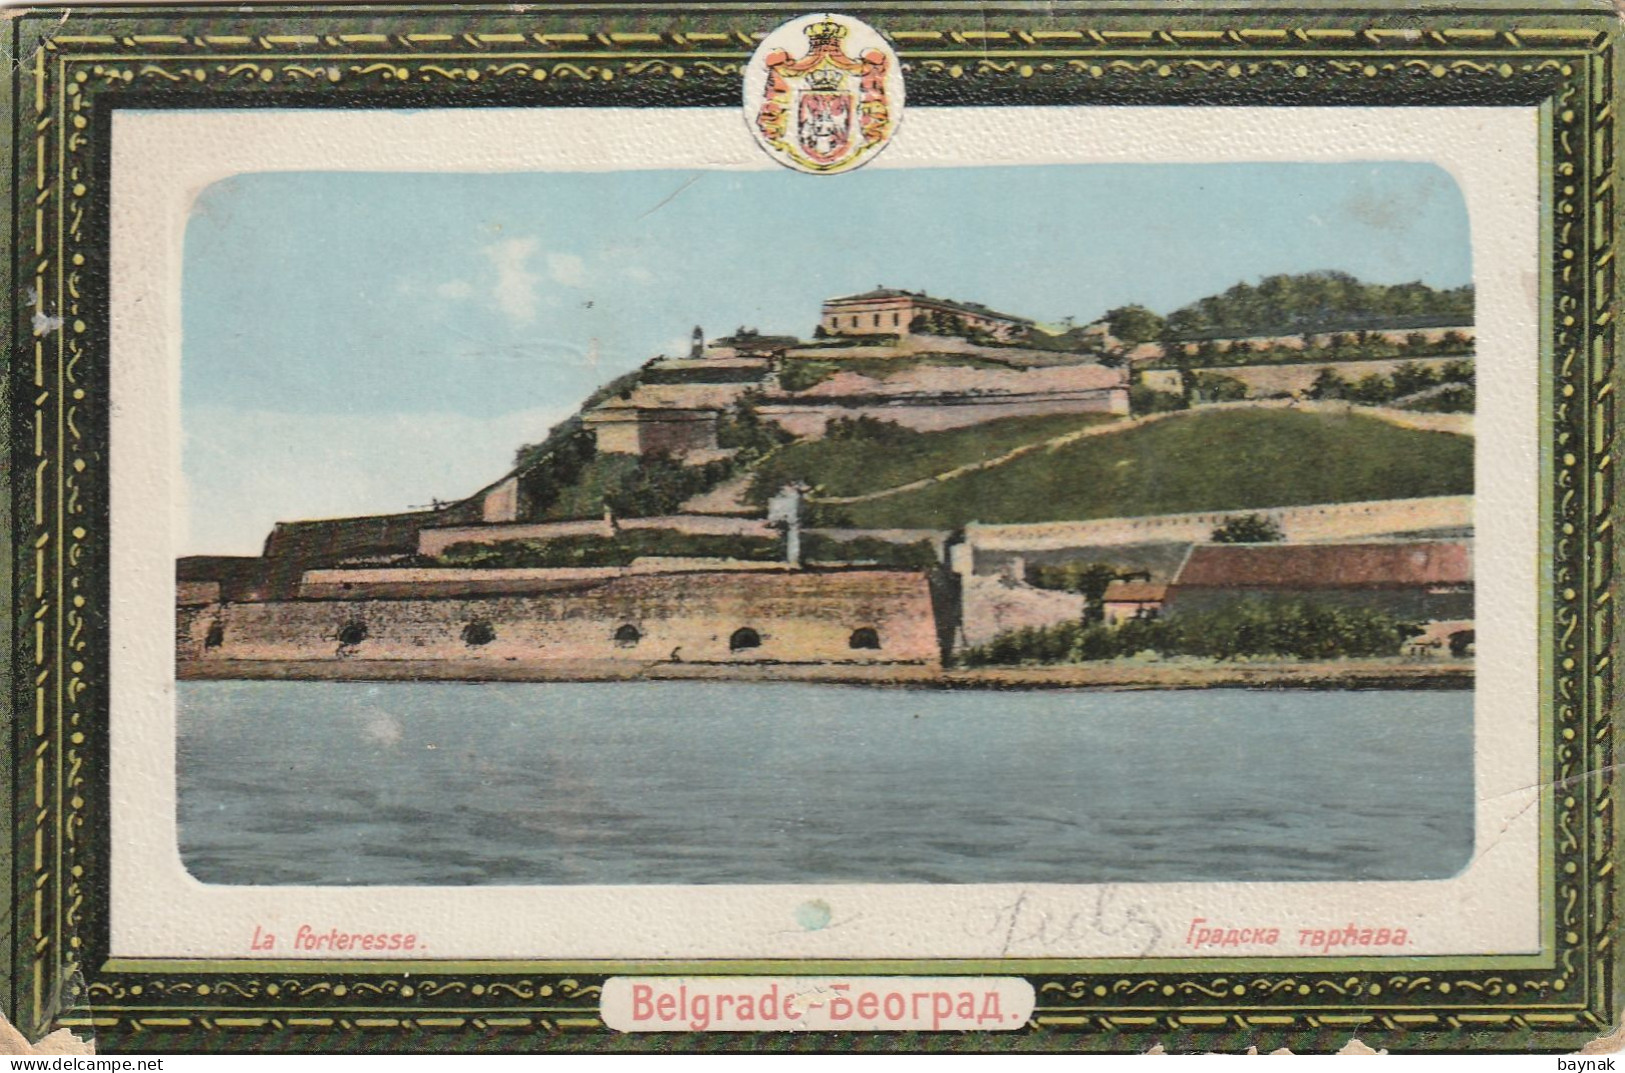 BGD790  --  BEOGRAD  --  LA  FORTERESSE --  1911 - Serbia